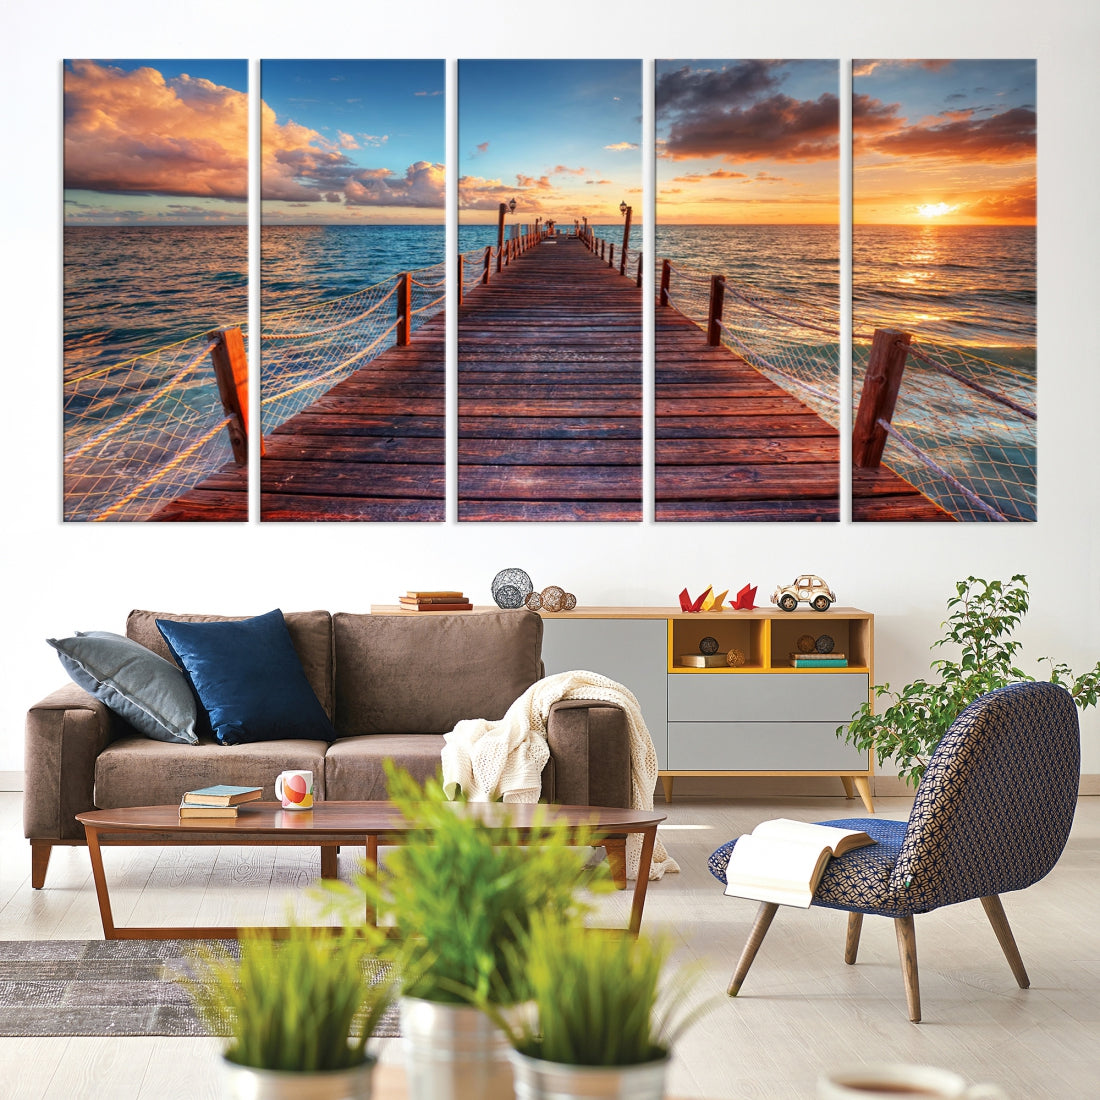 Multi Panel Sunset Beach and Pier Canvas Wall Art Giclee Print